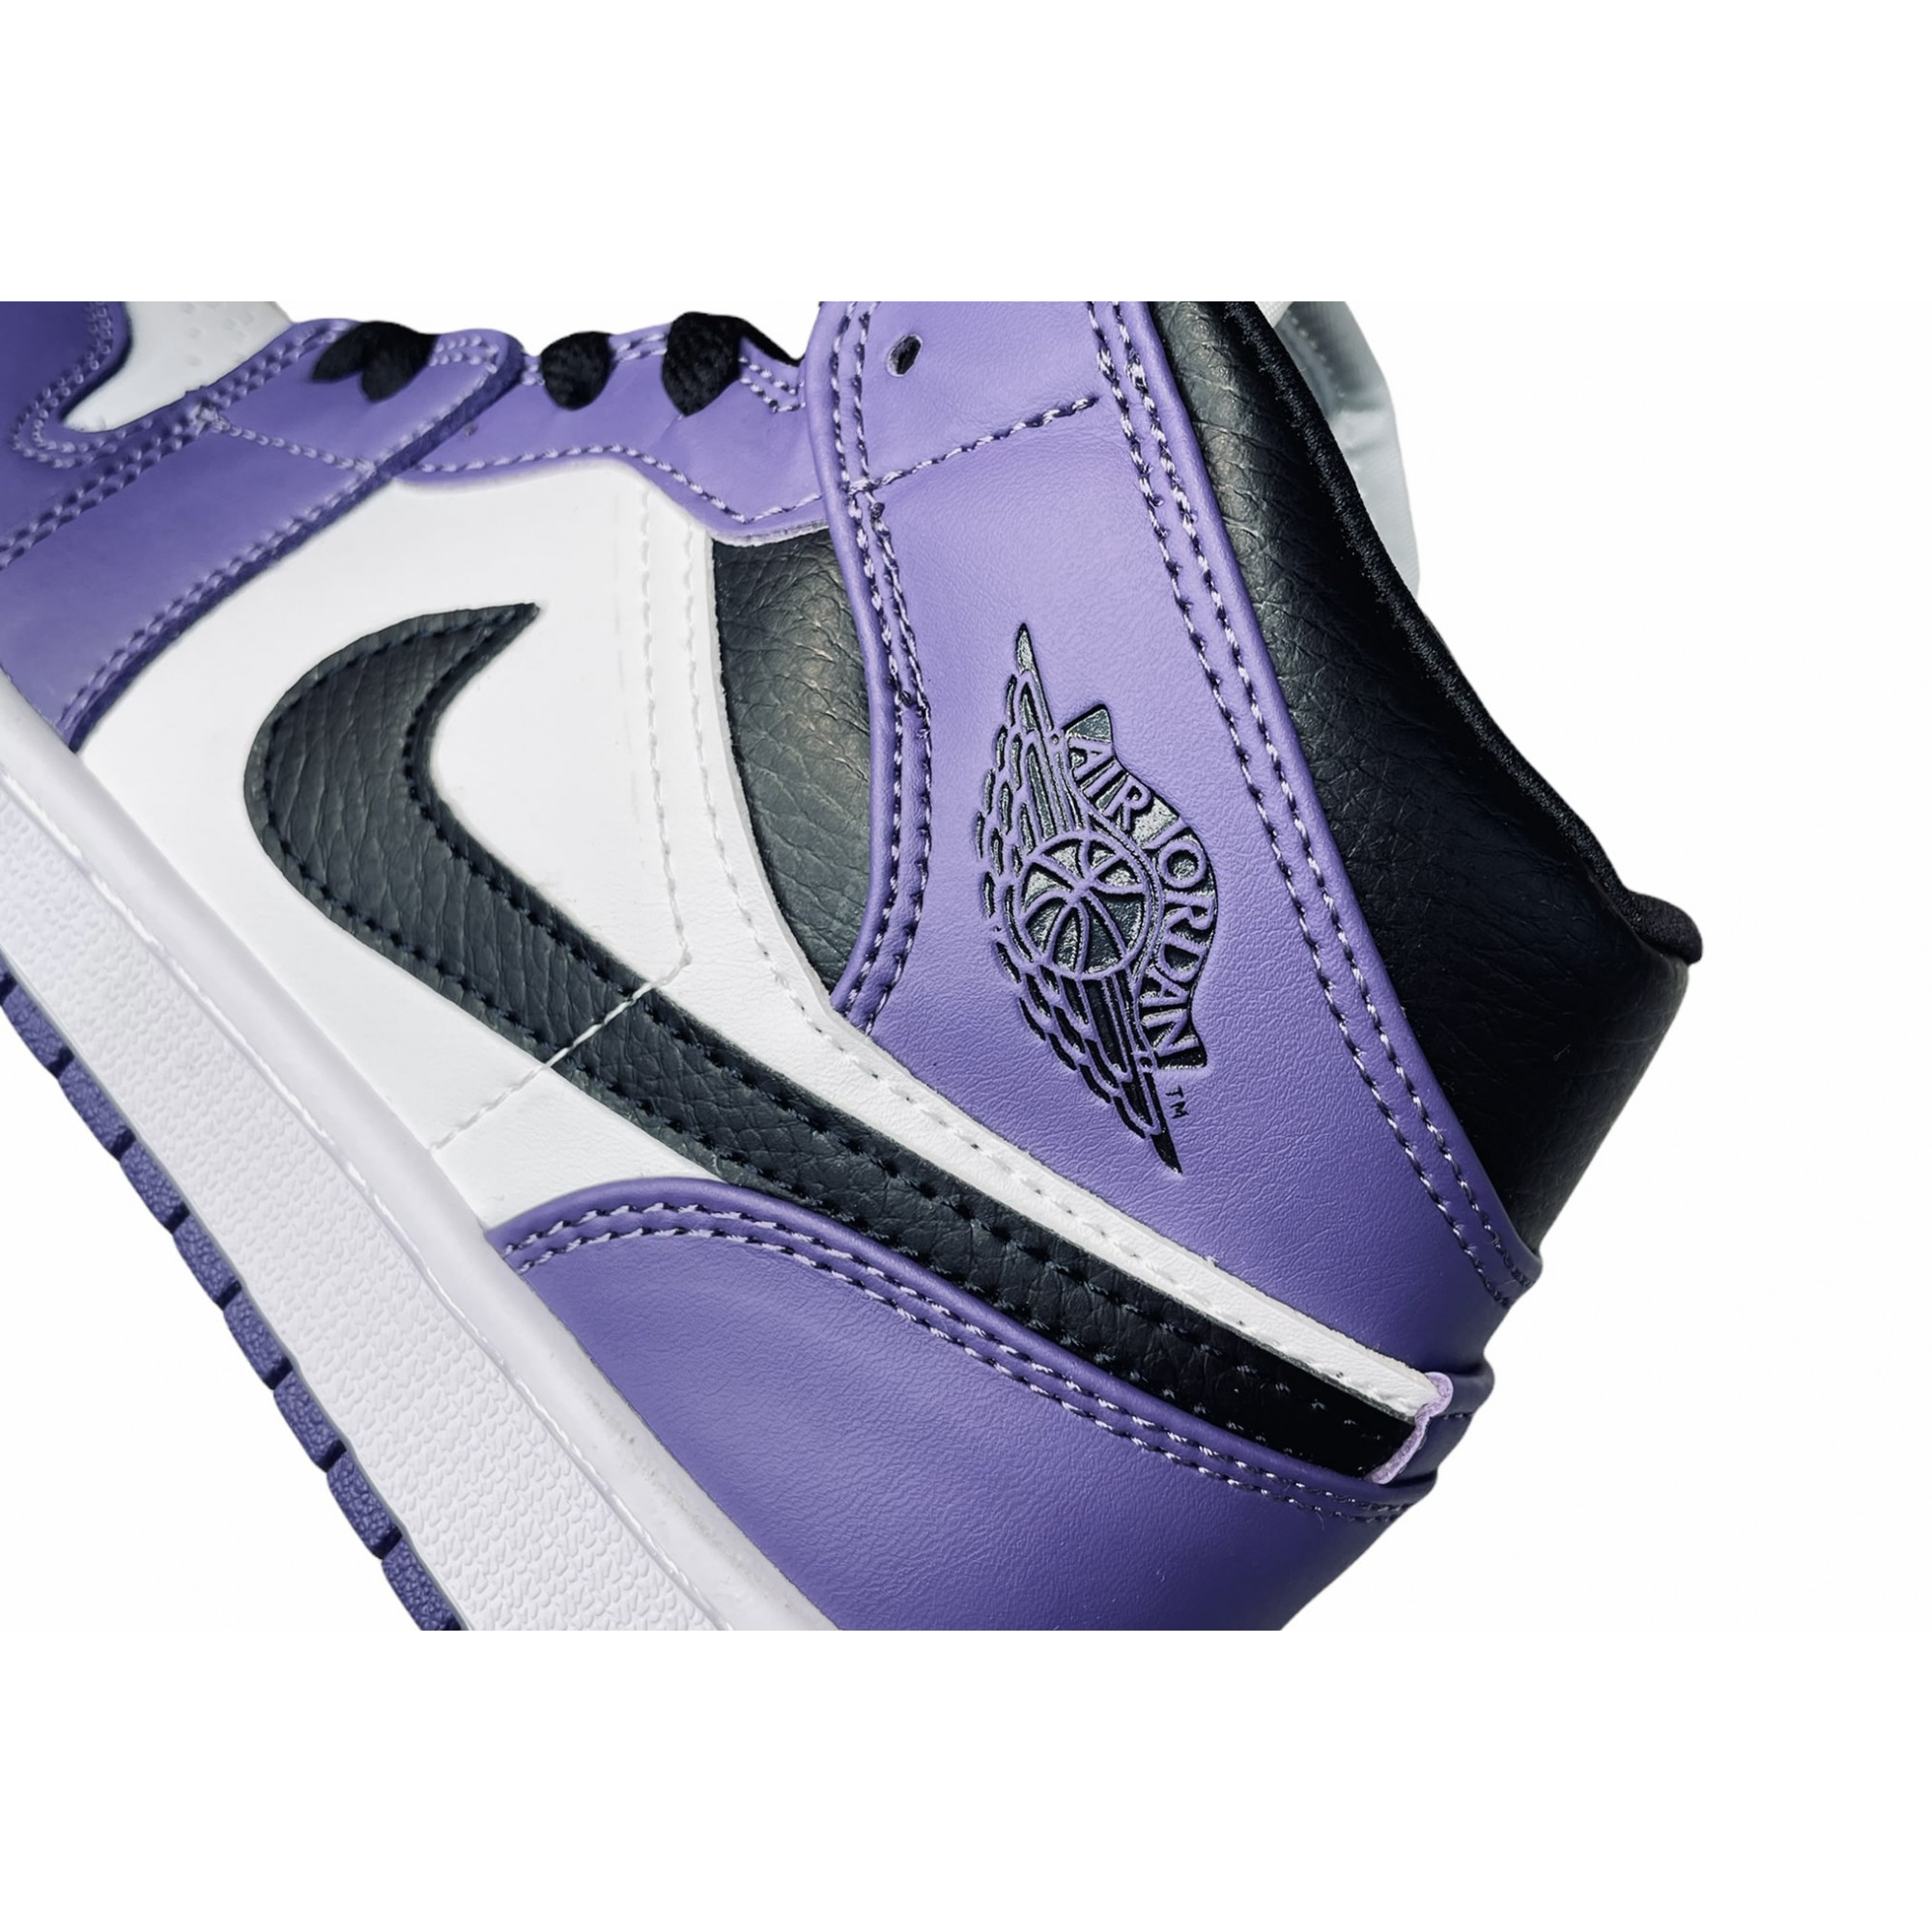 court purple jordan 1 size 7